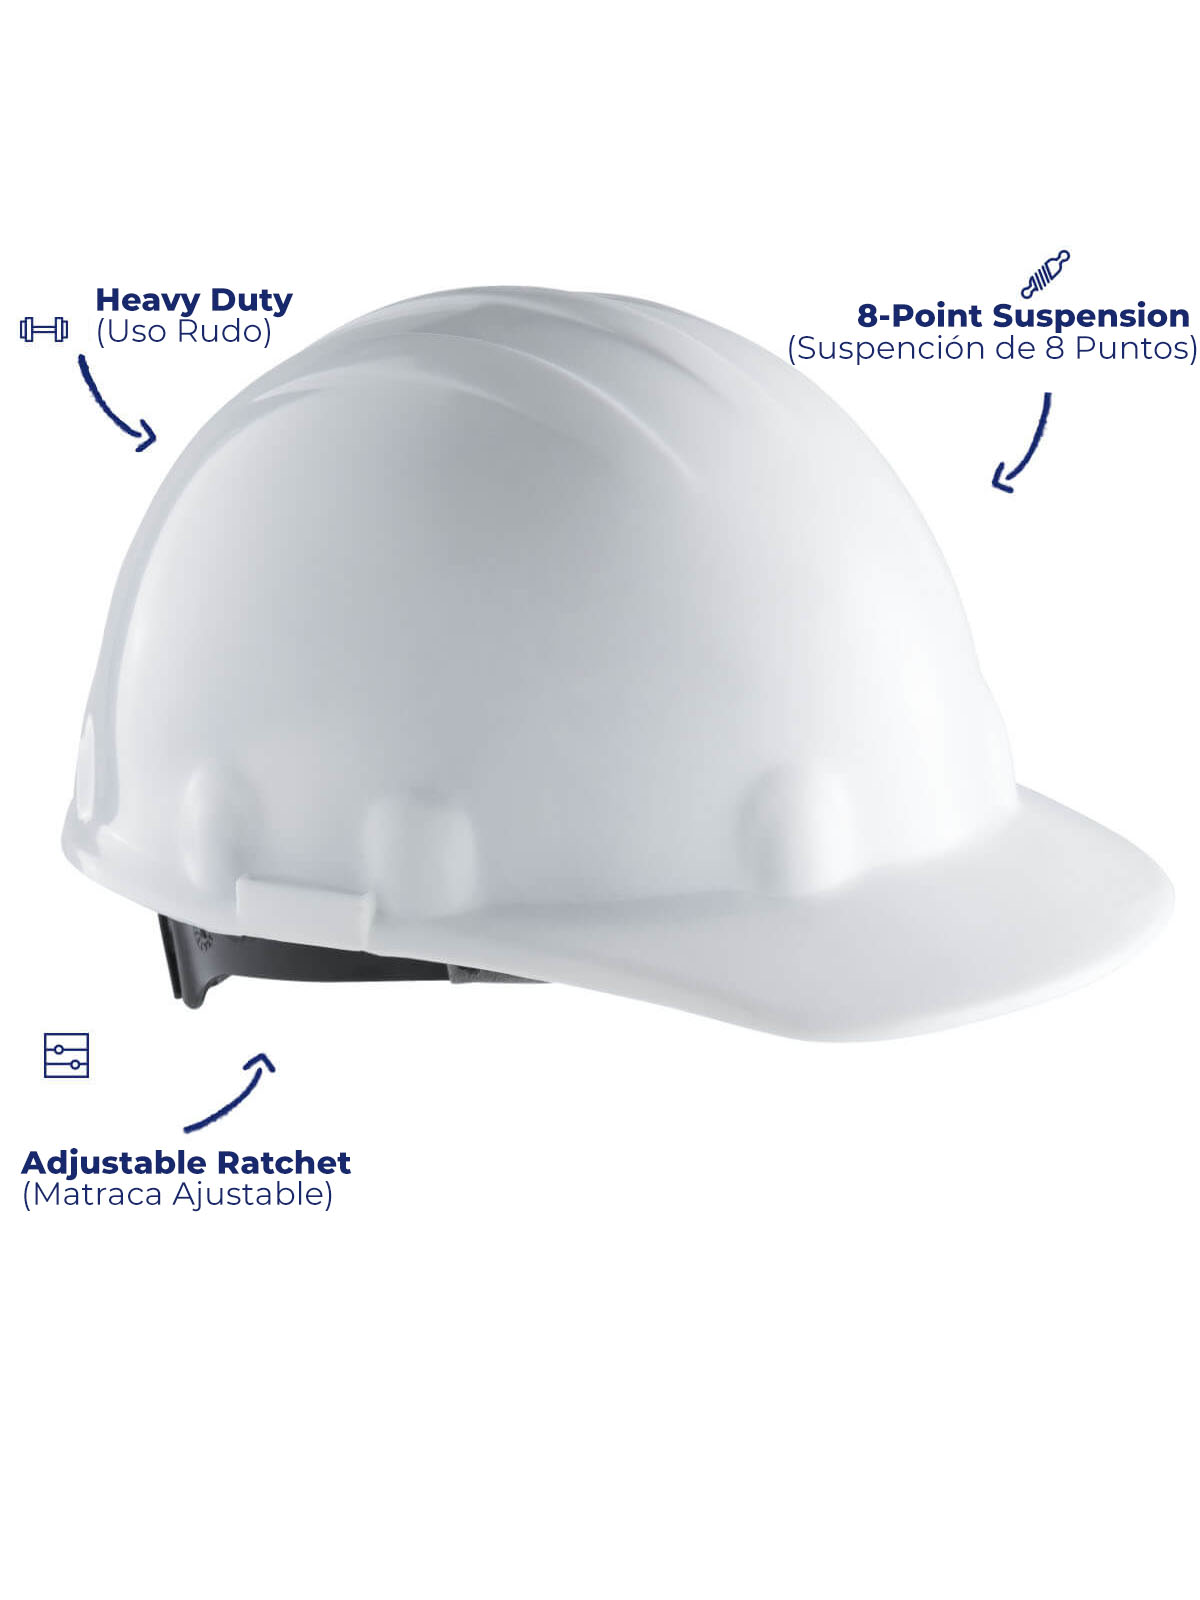 White safety helmet for construction